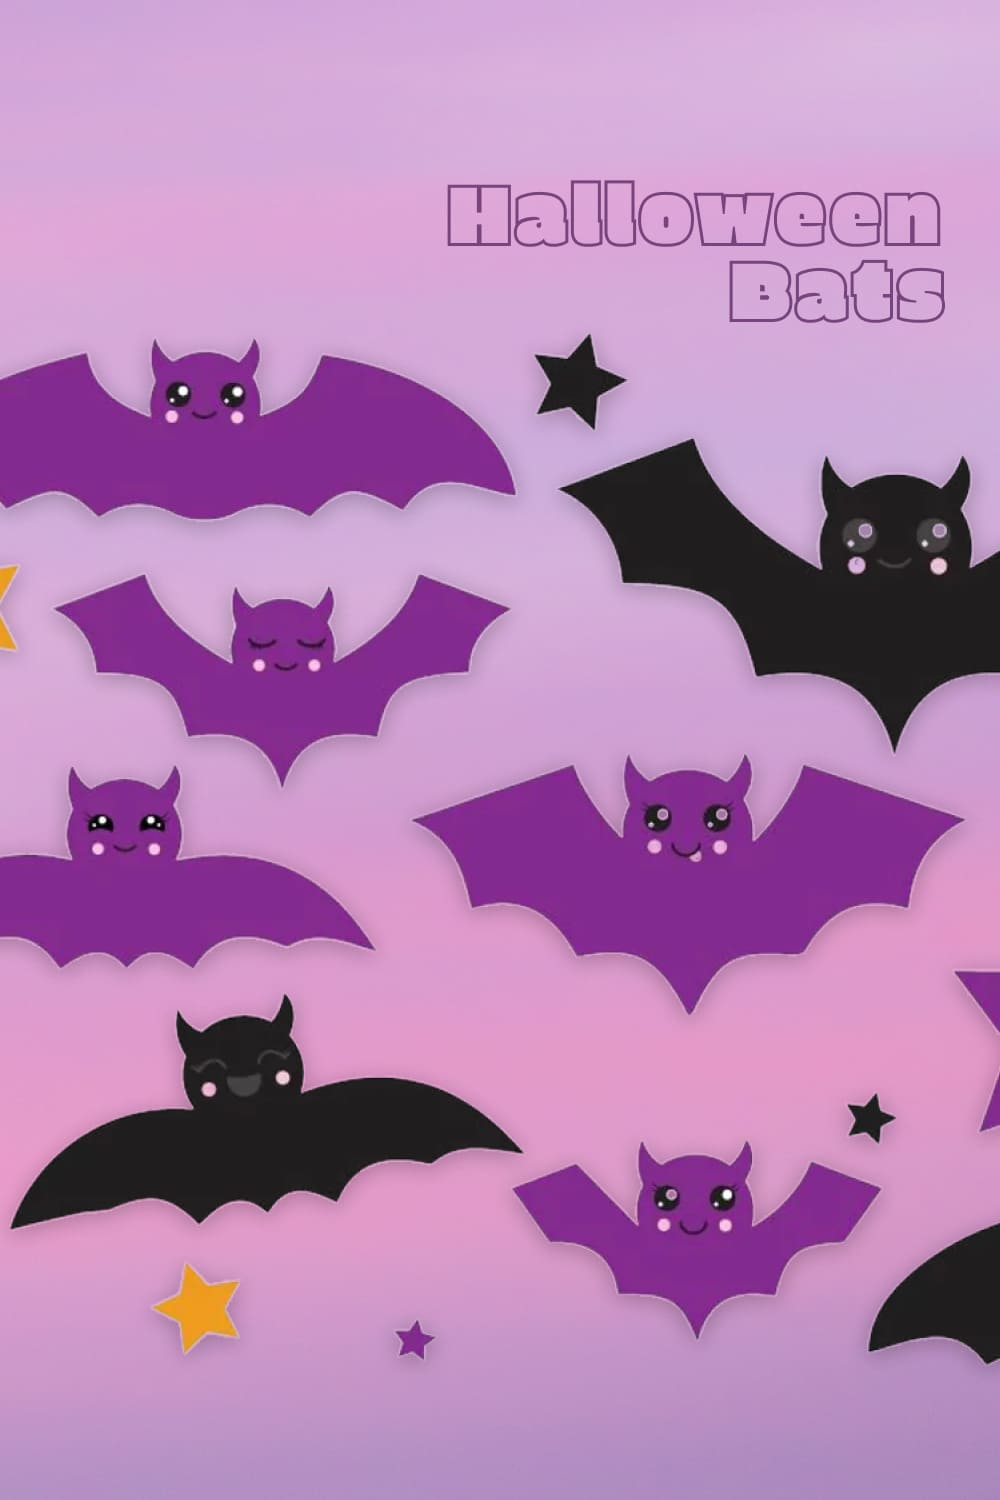 Halloween Bats Graphics and Illustrations pinterest image.